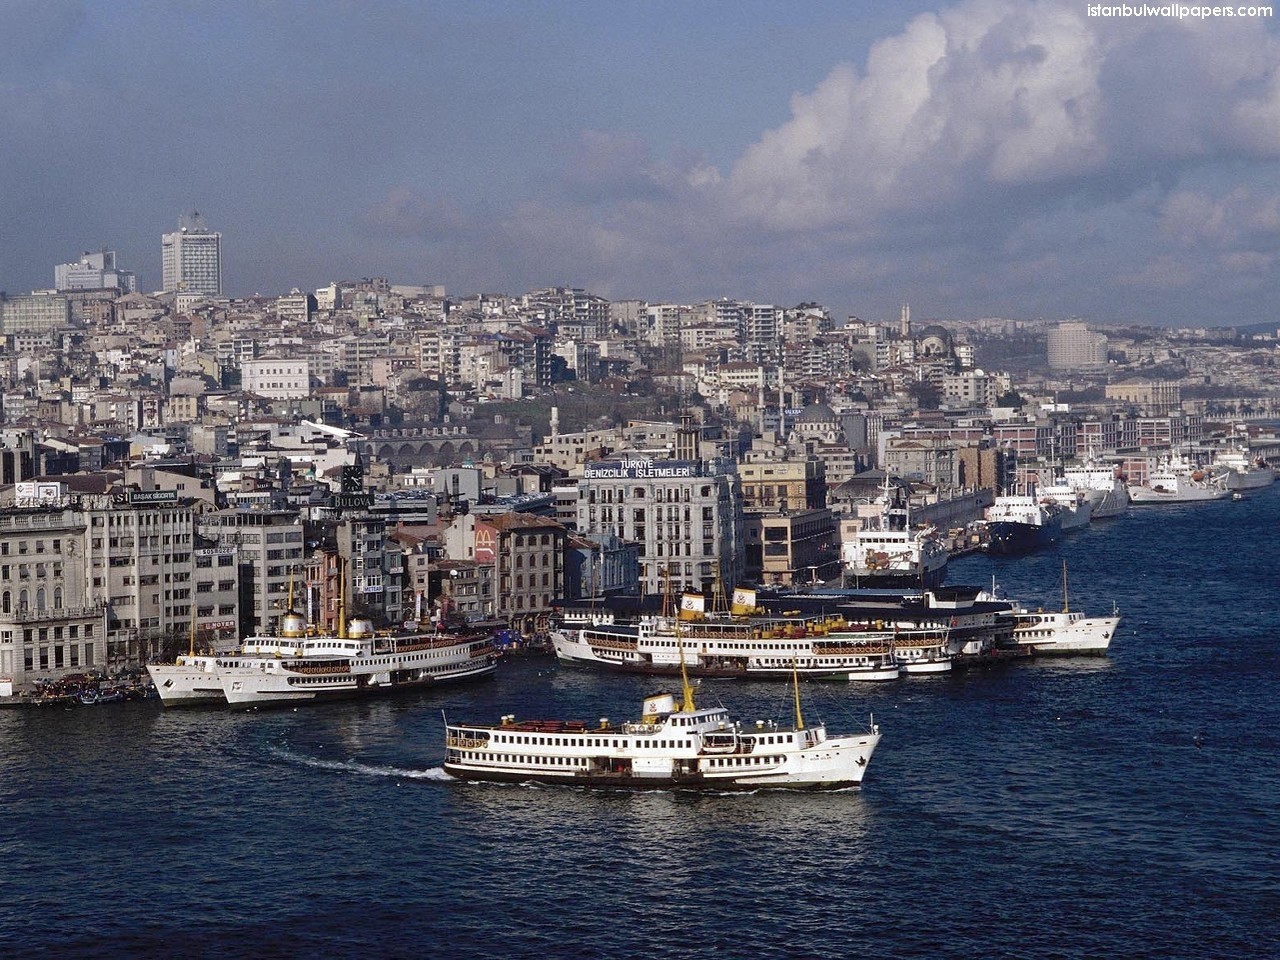 General 1280x960 Istanbul Turkey cityscape ship city vehicle